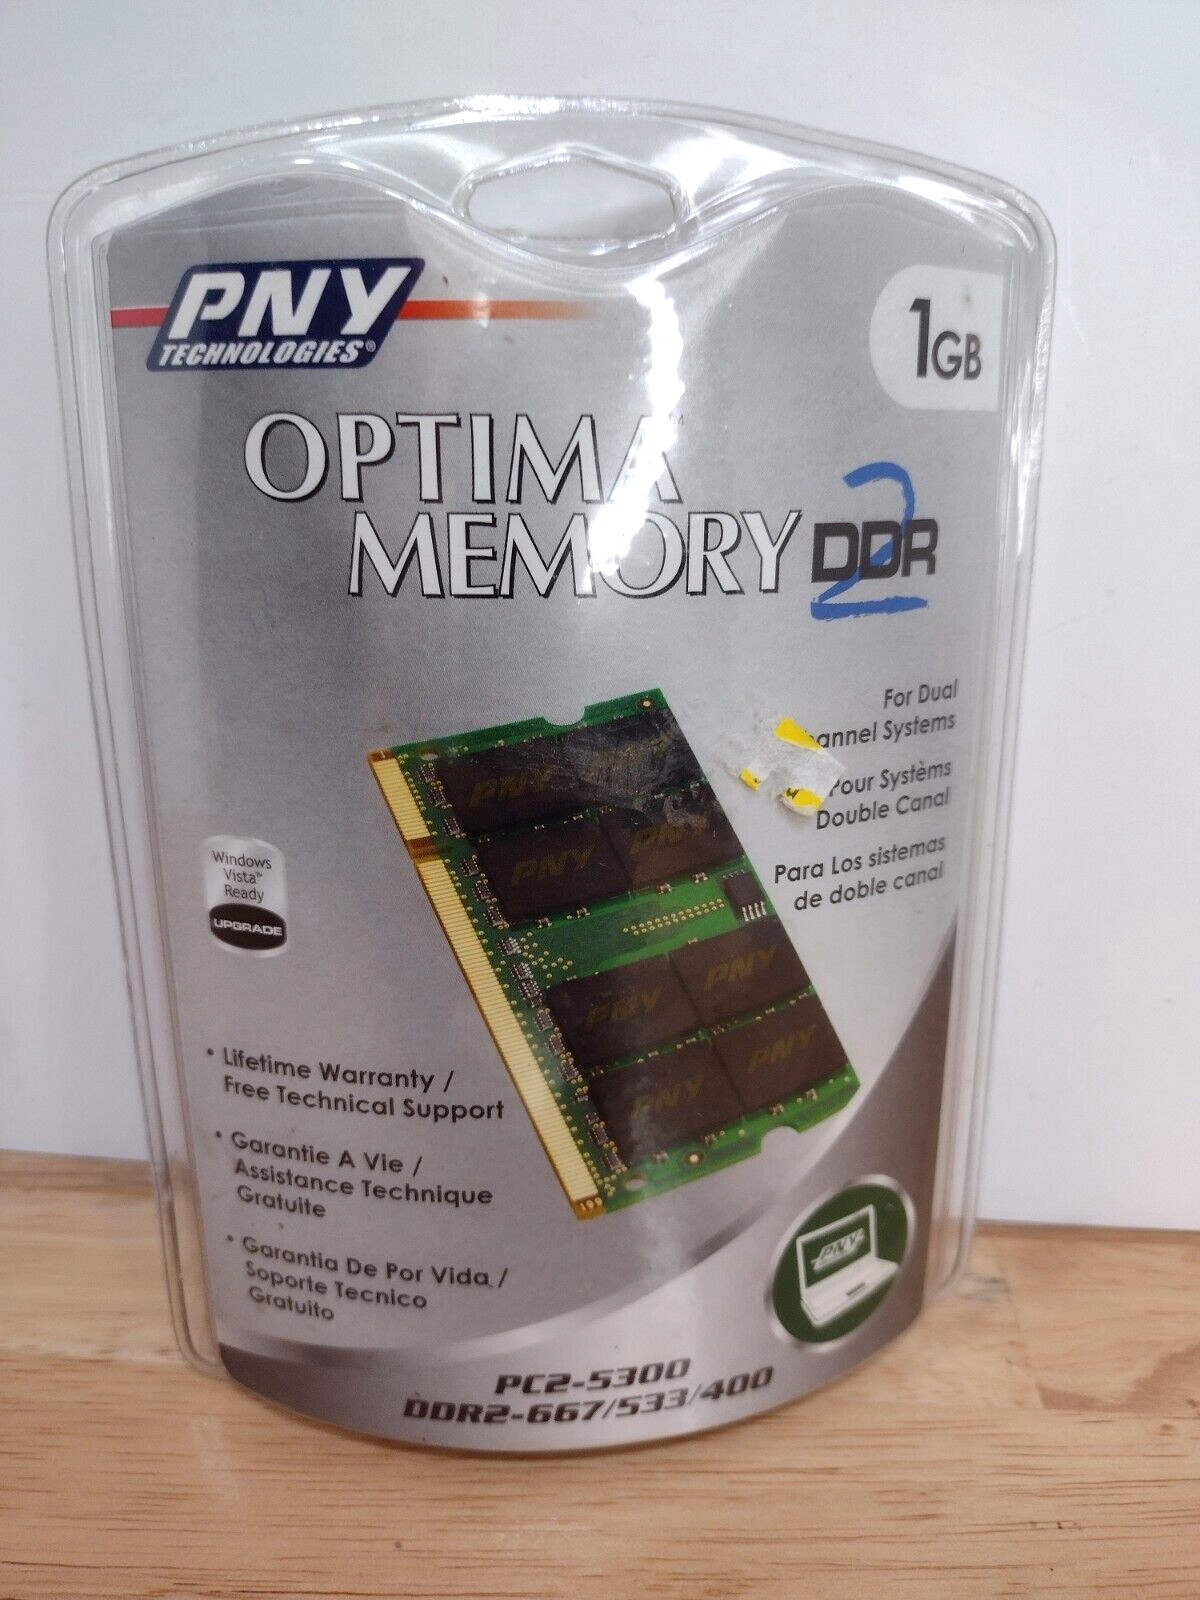 pny optima 1 gb ram memory stick pc2-5300 ddr2-667/533/400 NOS Sealed